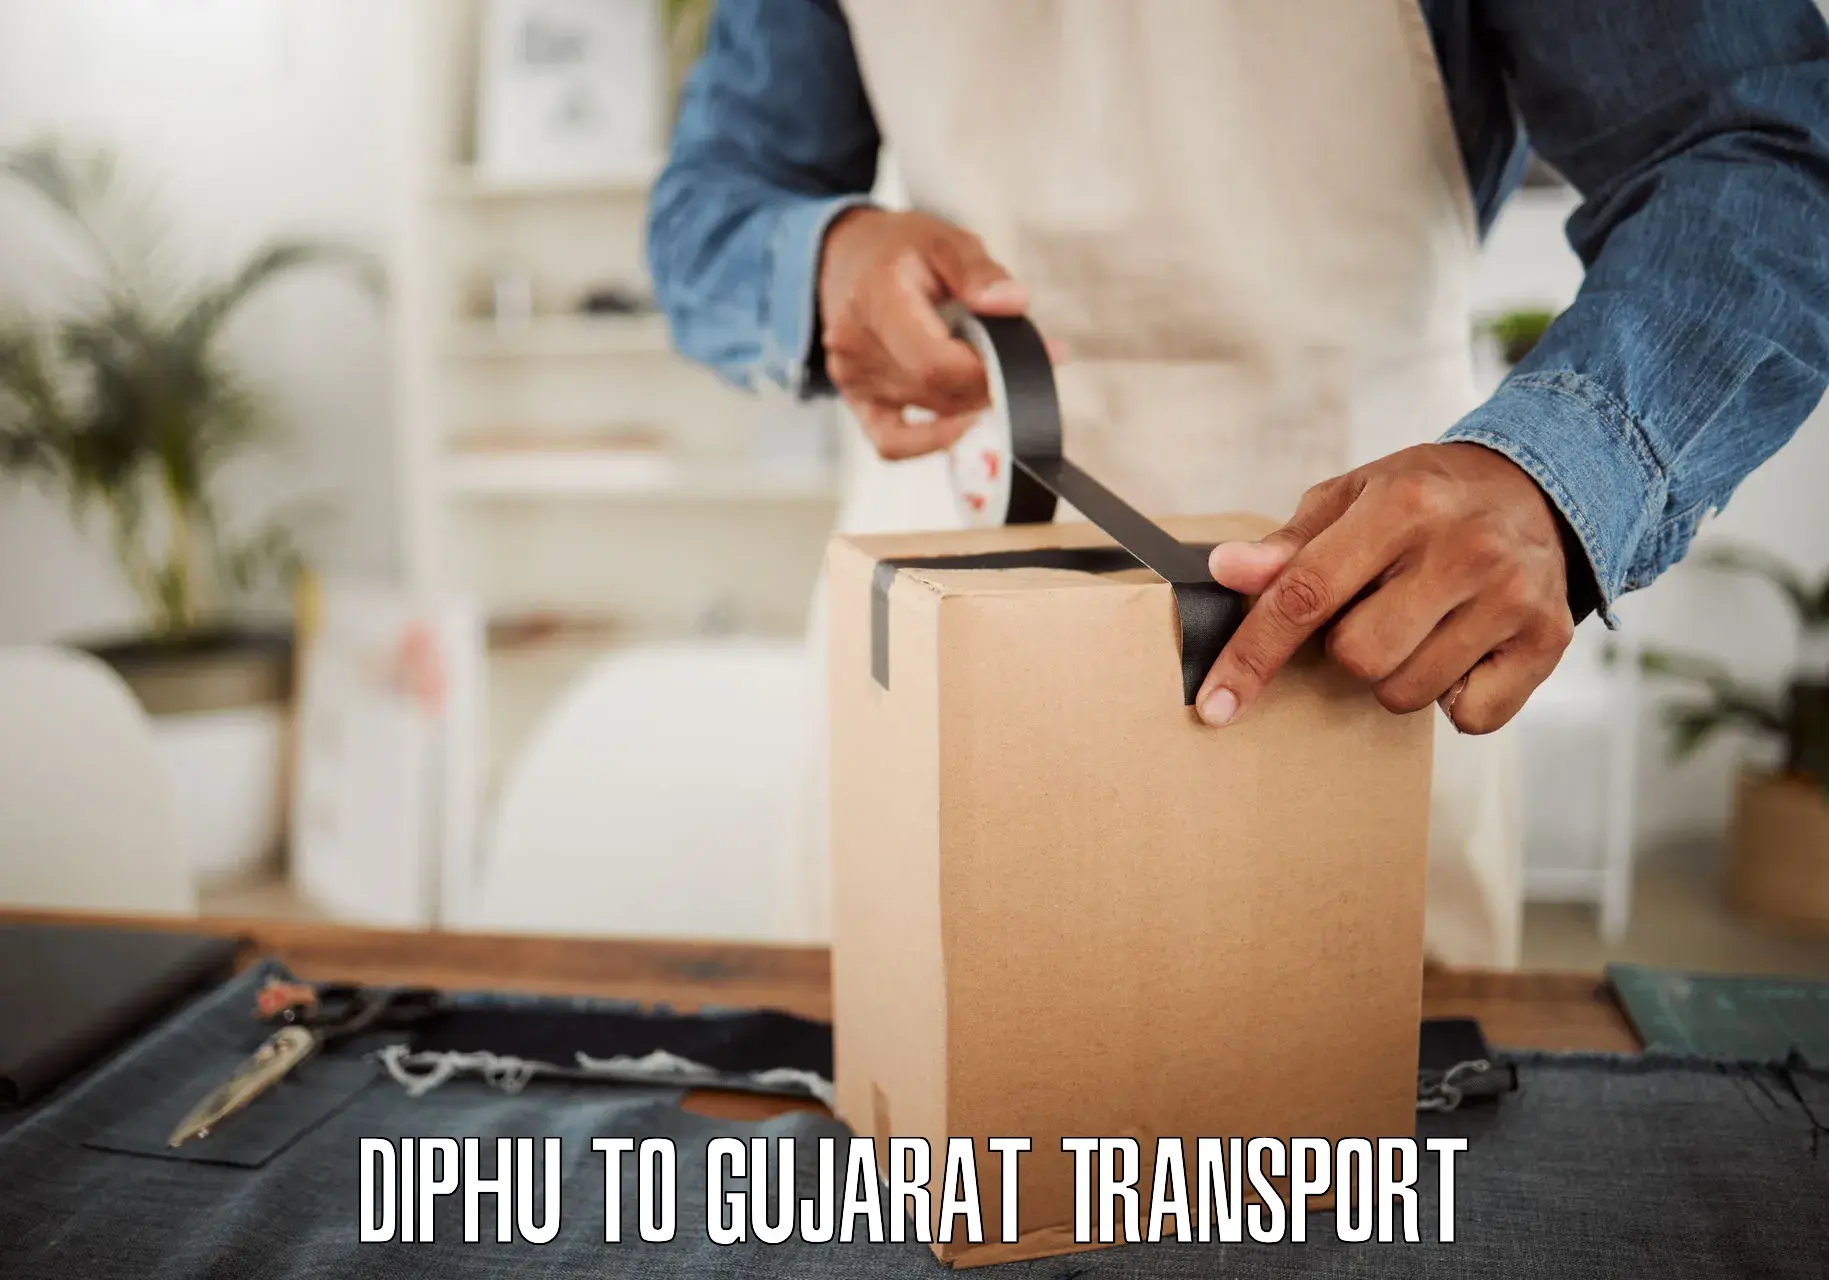 Online transport service Diphu to Morbi